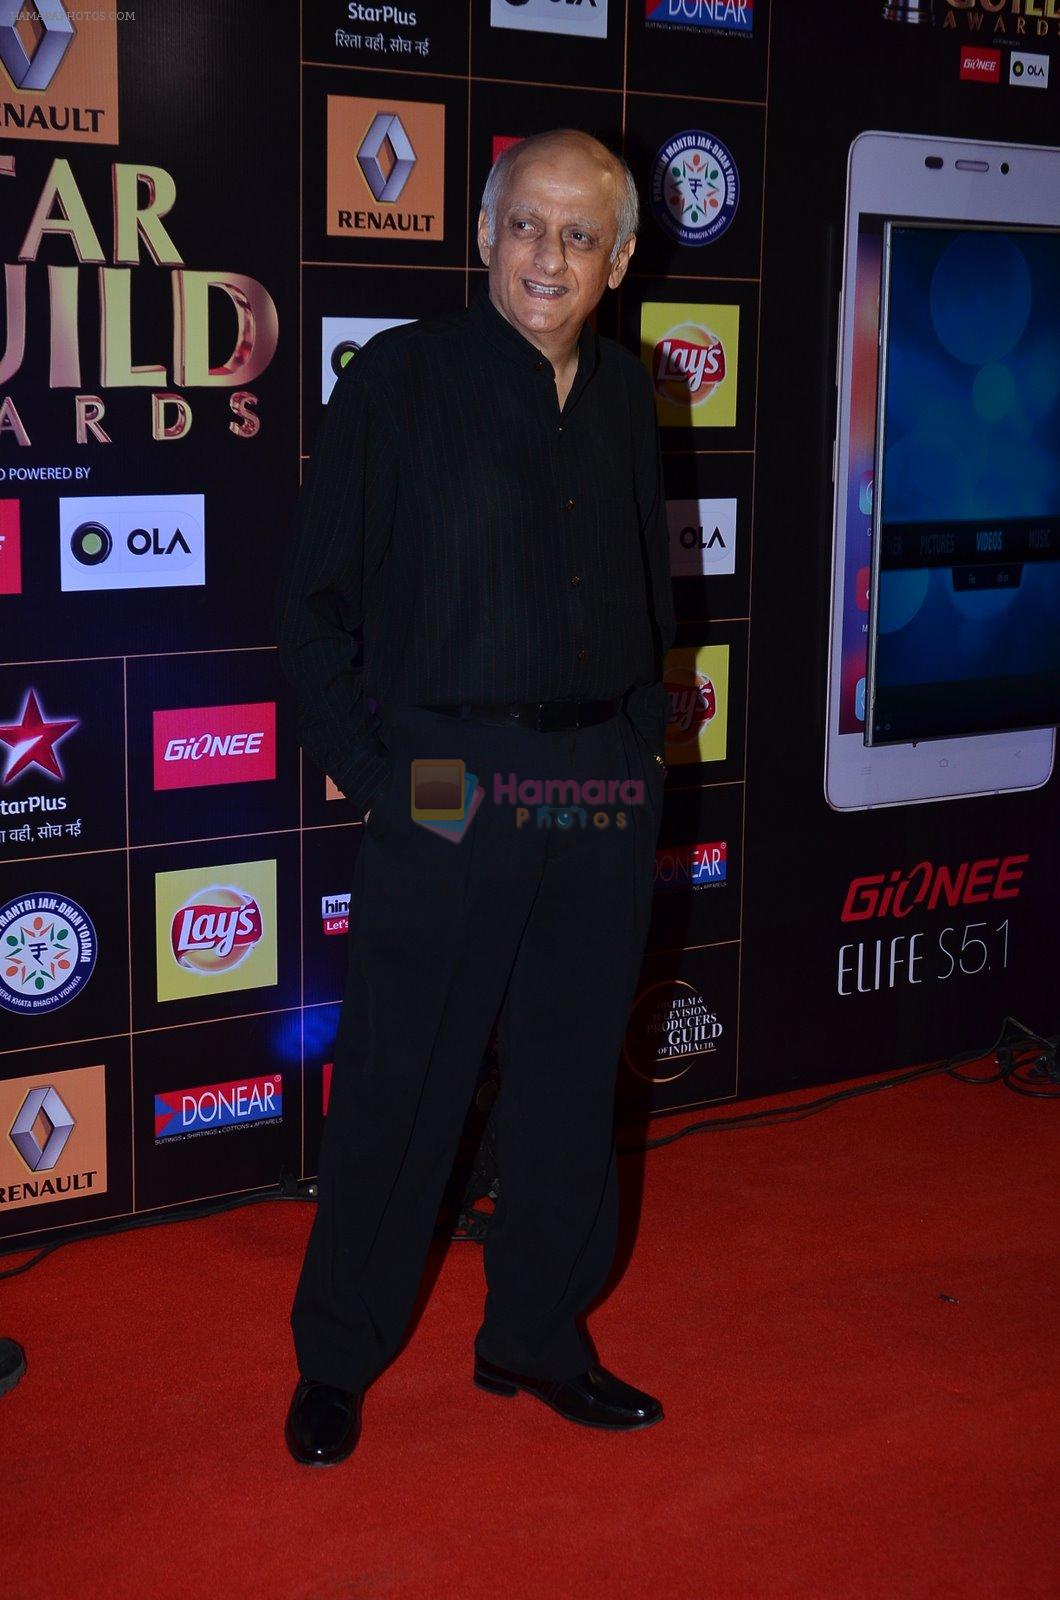 Mukesh Bhatt at Producers Guild Awards 2015 in Mumbai on 11th Jan 2015